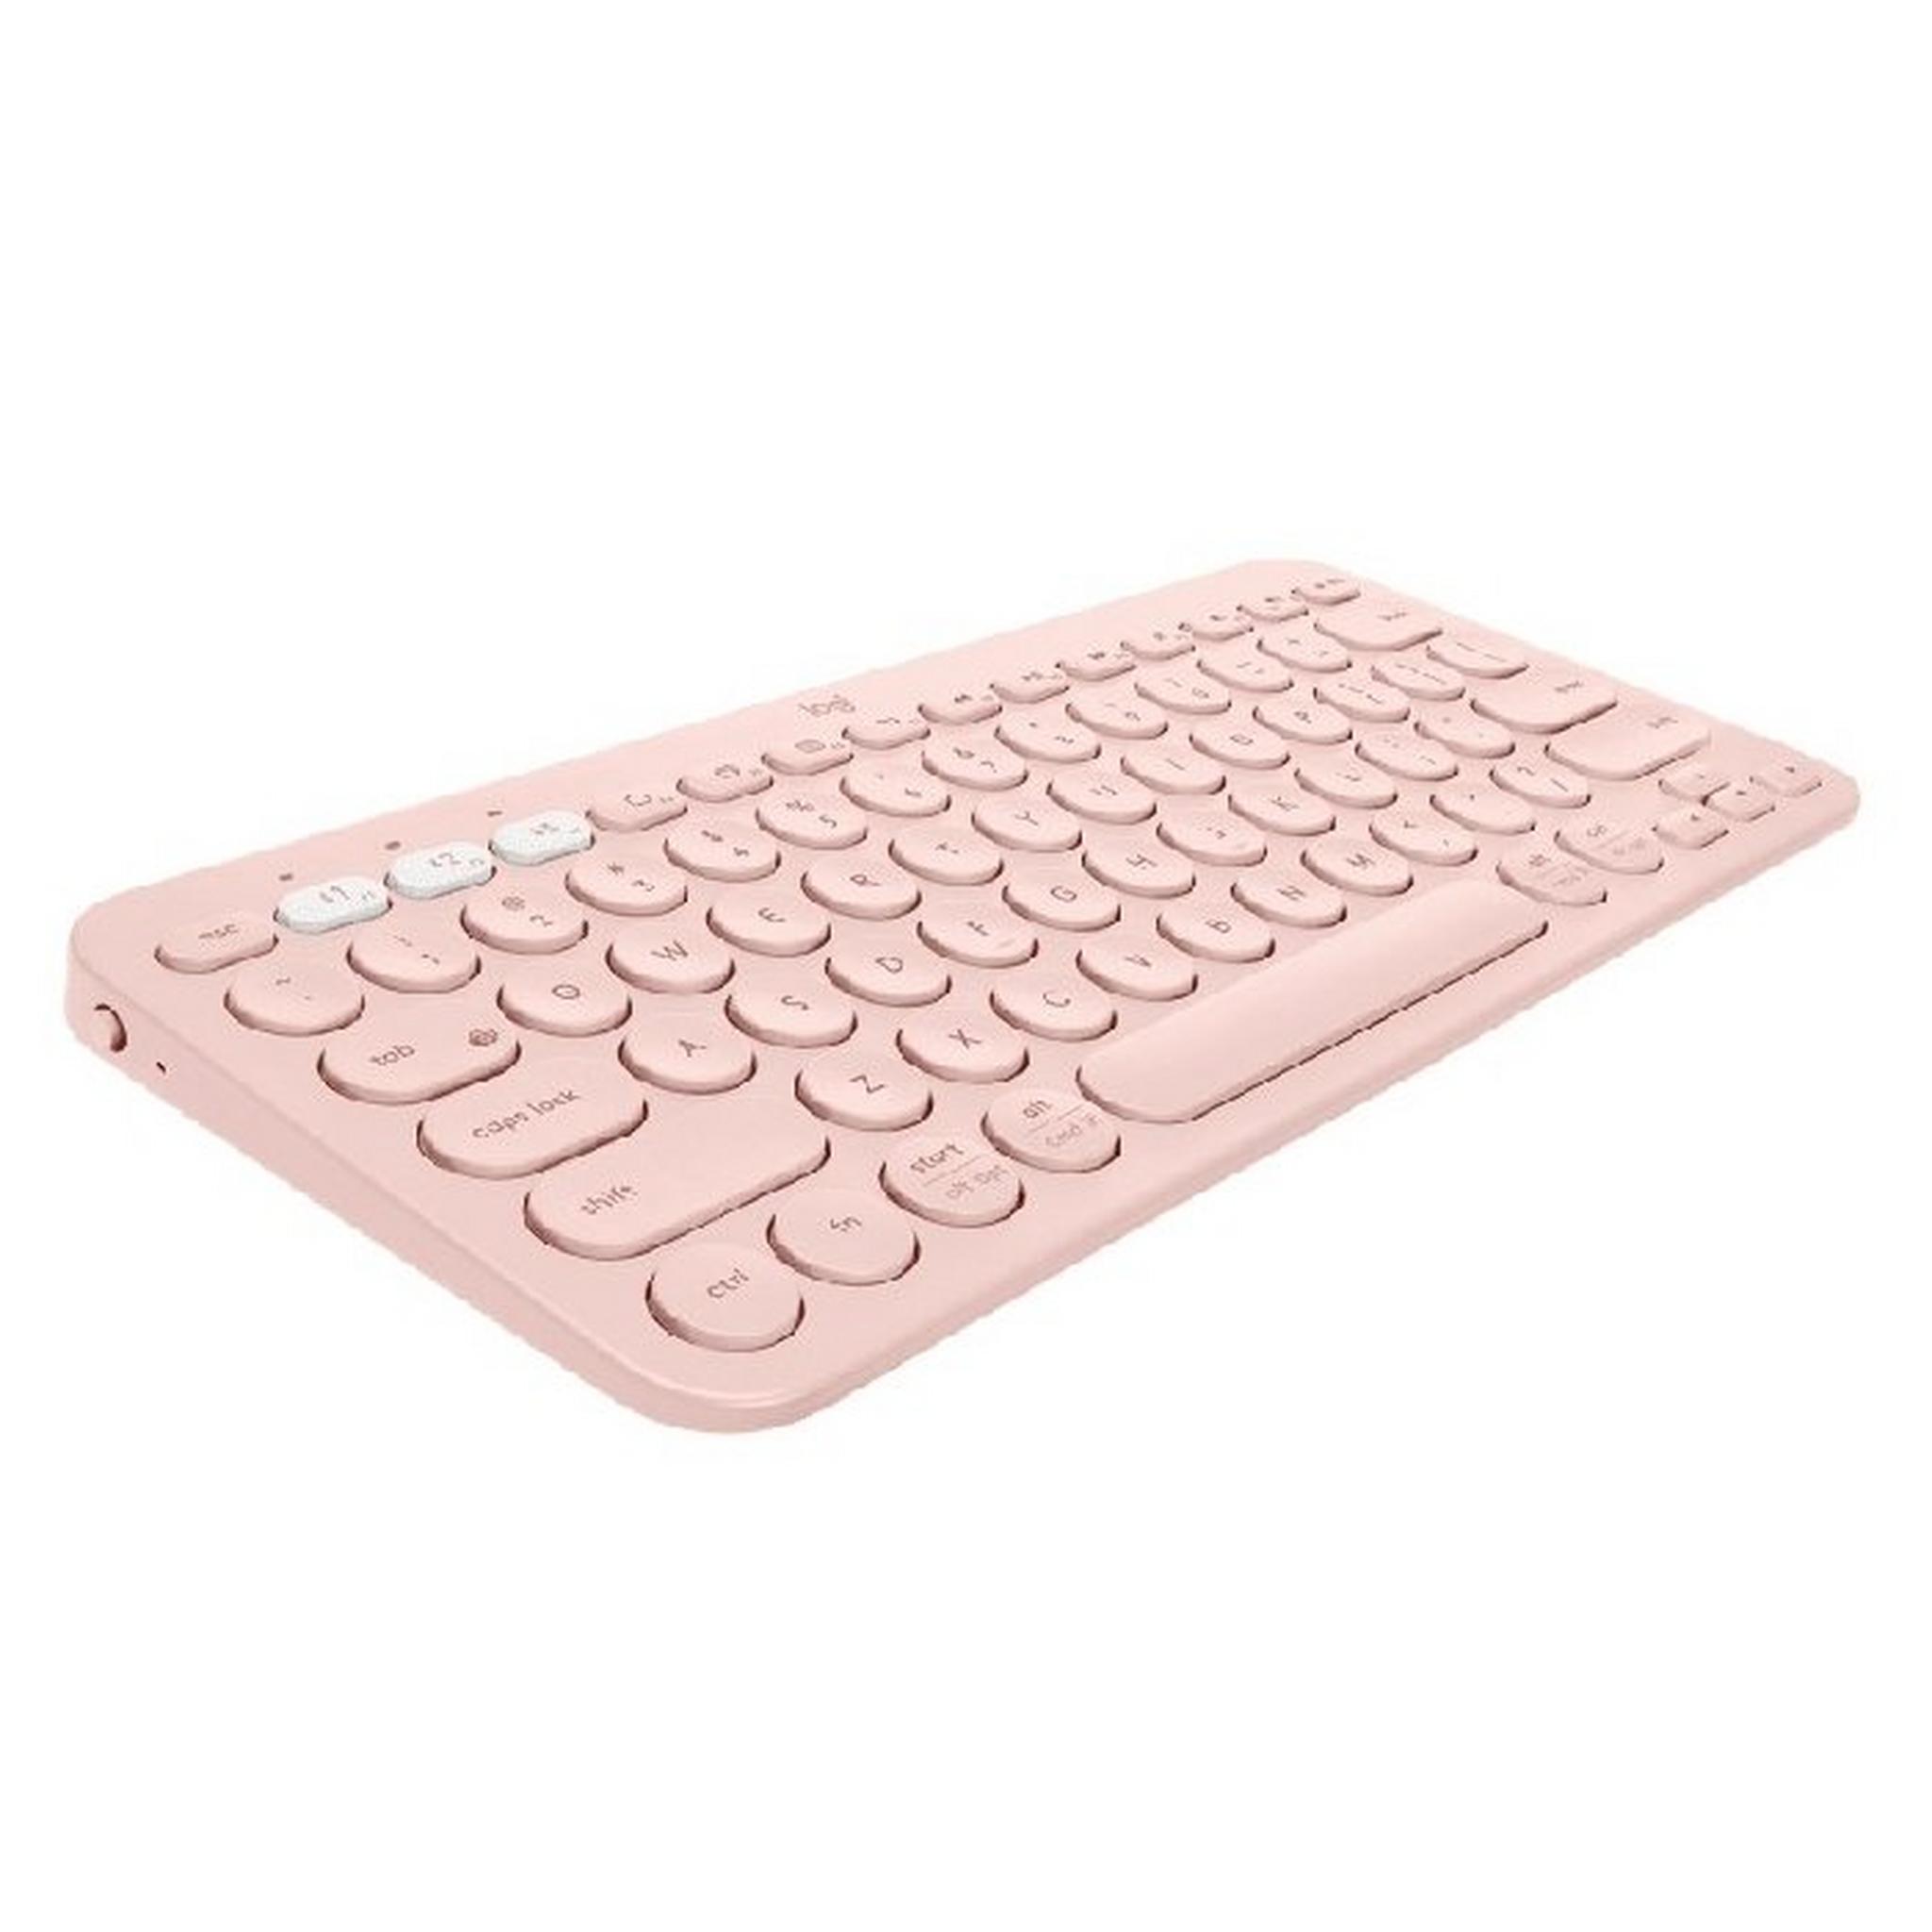 Logitech Multi-Device Bluetooth Keyboard K380 - Rose